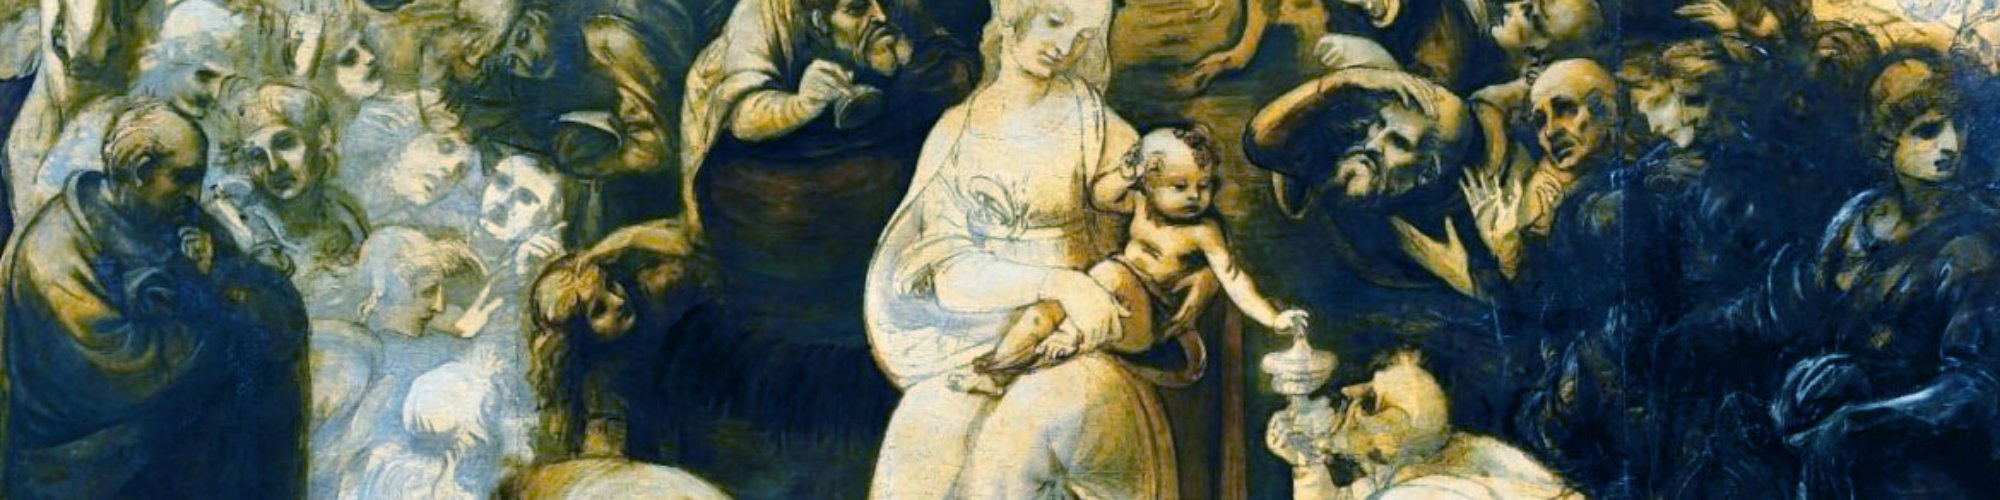 Anbetung der Könige, Leonardo da Vinci, Detail